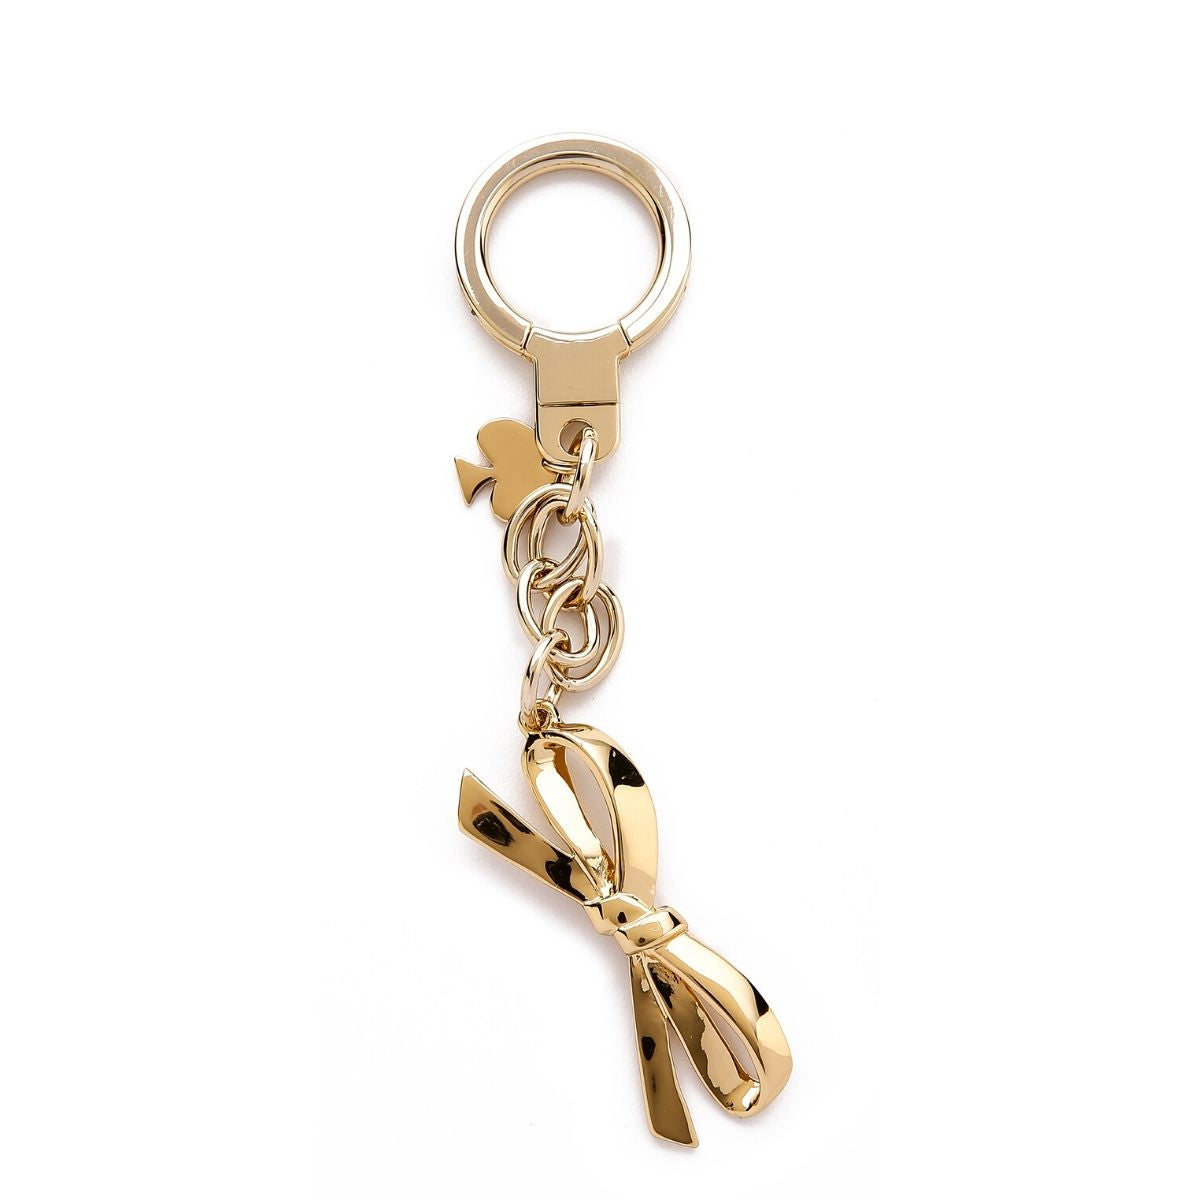 NEW Purse Scarf Braided Bow Key Design Gold Clip Bag Charm 